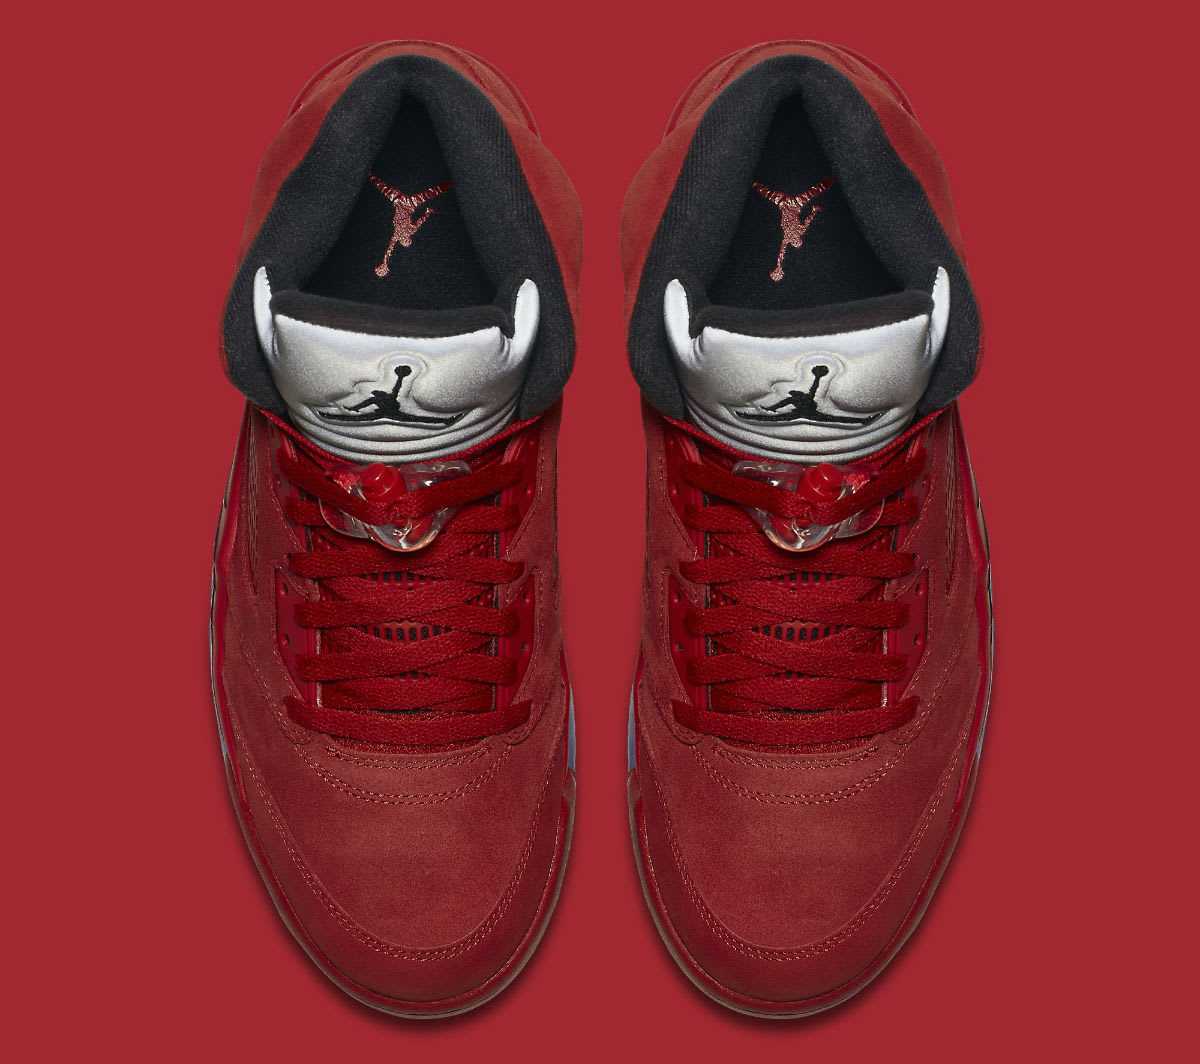 Air Jordan 5 Red Suede Release Date Top 136027-602